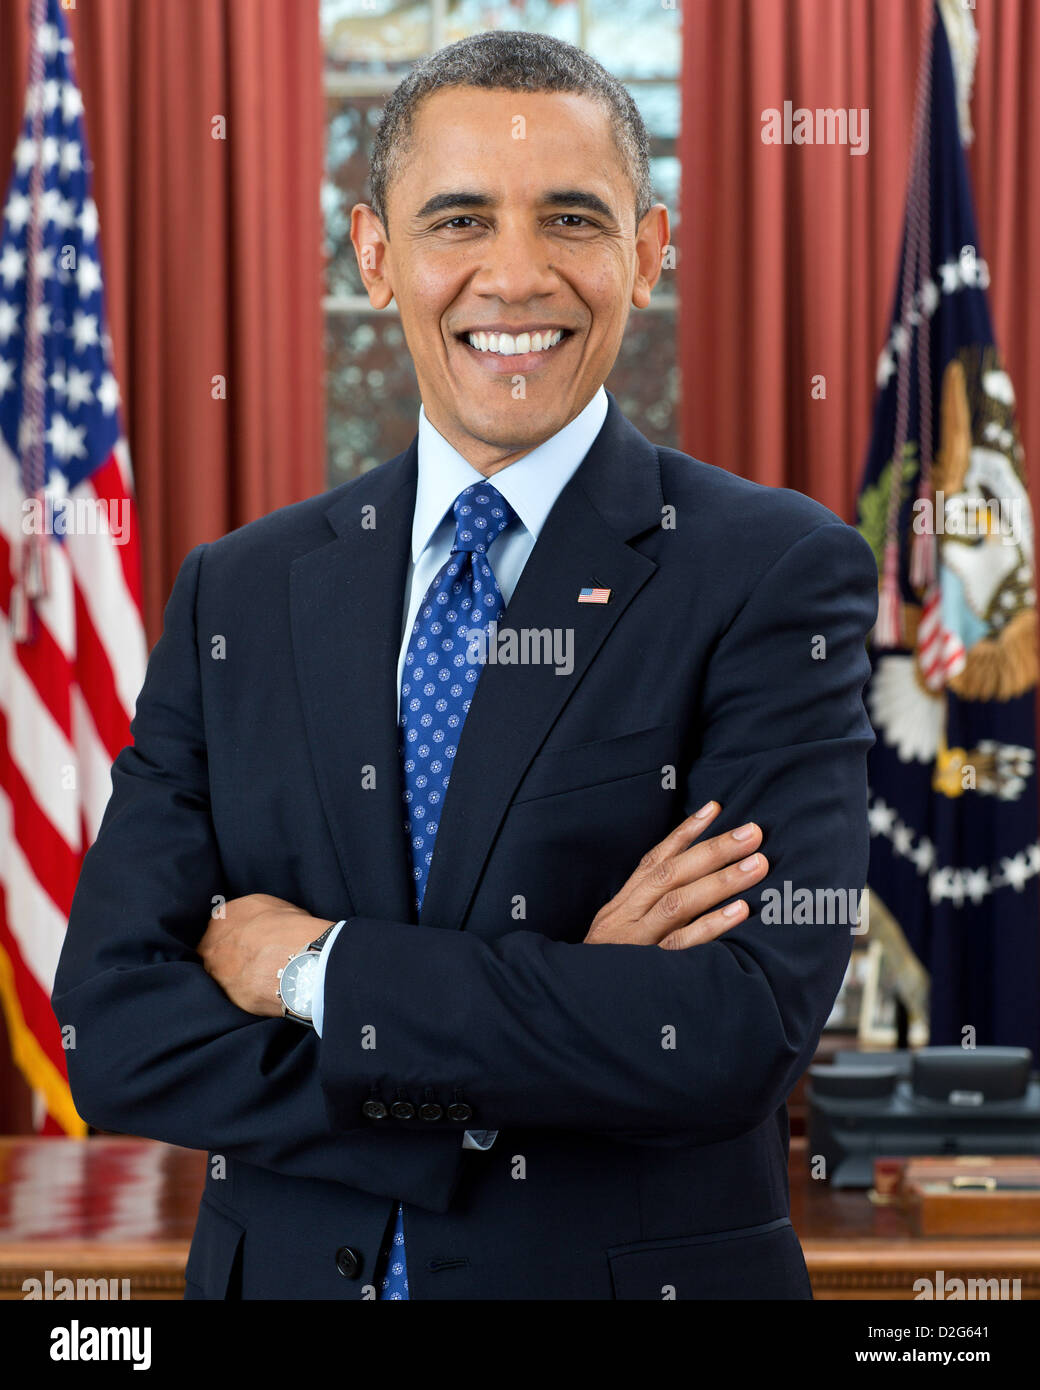 Präsident Barack Obama, 44. Präsident der Vereinigten Staaten. Offizielles Foto im Oval Office, 6. Dezember 2012. Stockfoto